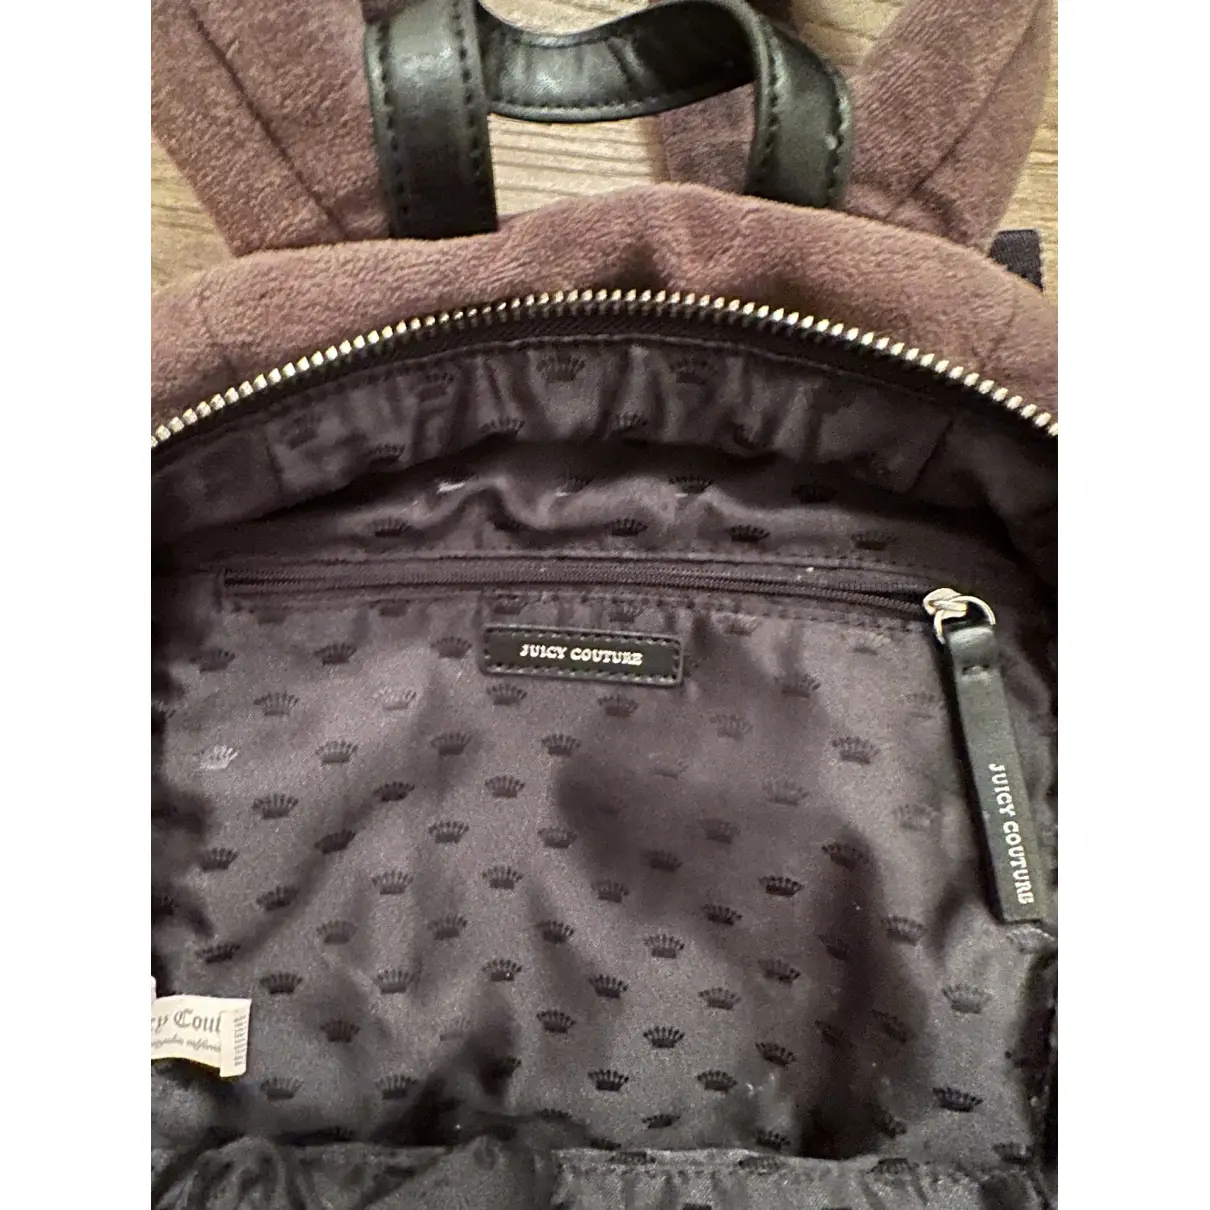 Buy Juicy Couture Backpack online